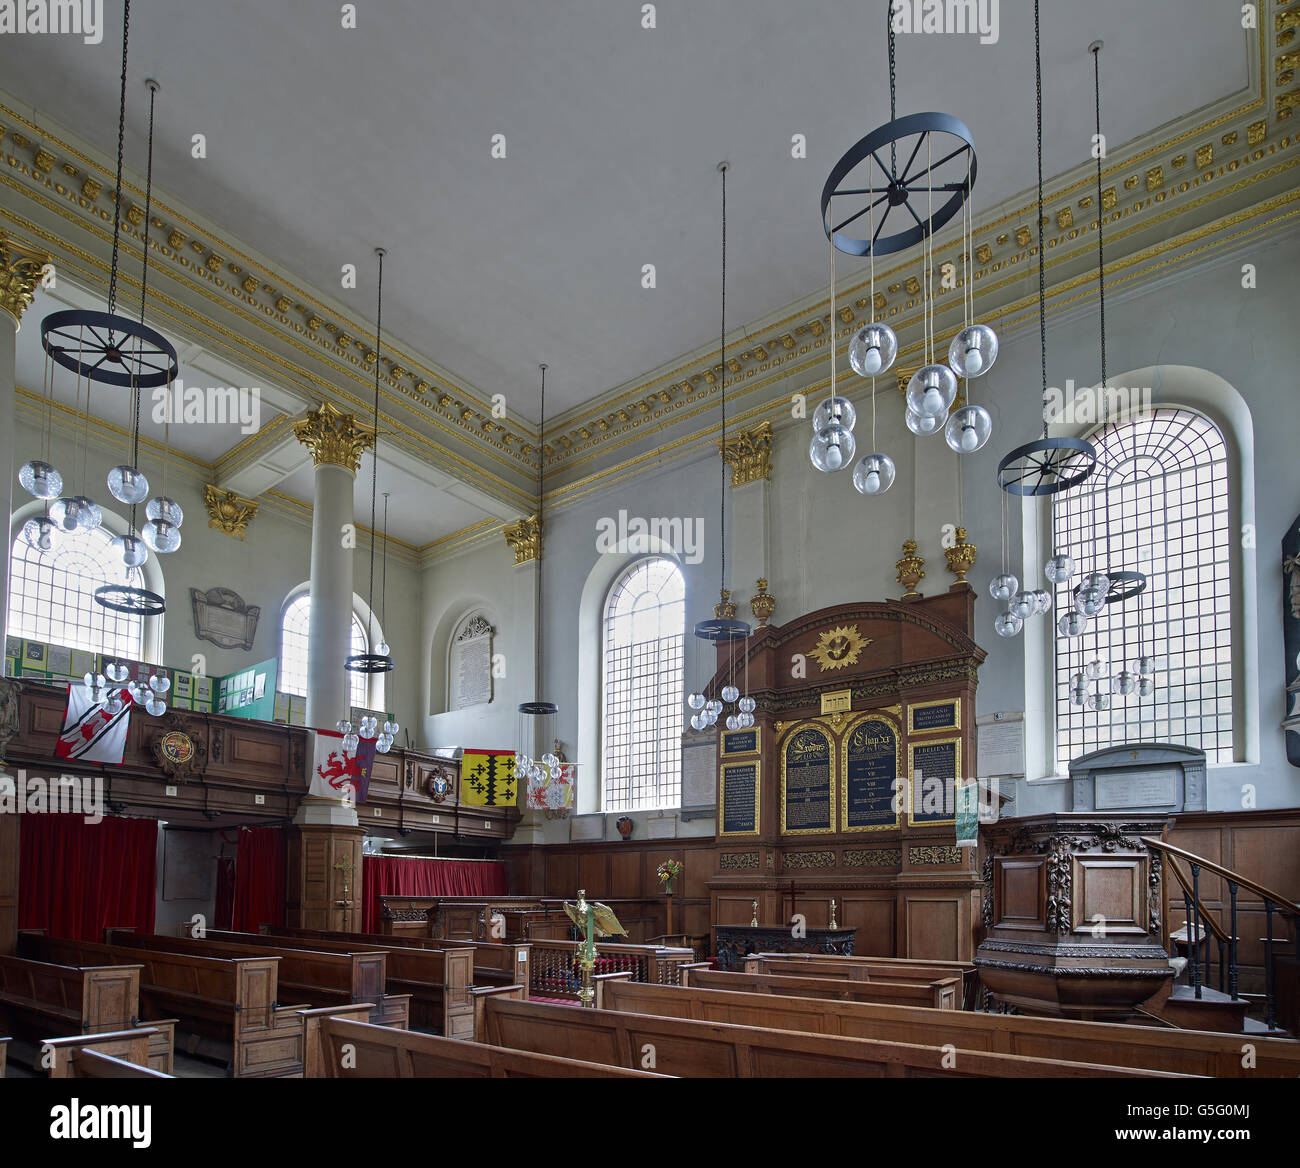 St Benet Paul's Wharf, London chiesa, interno Foto Stock